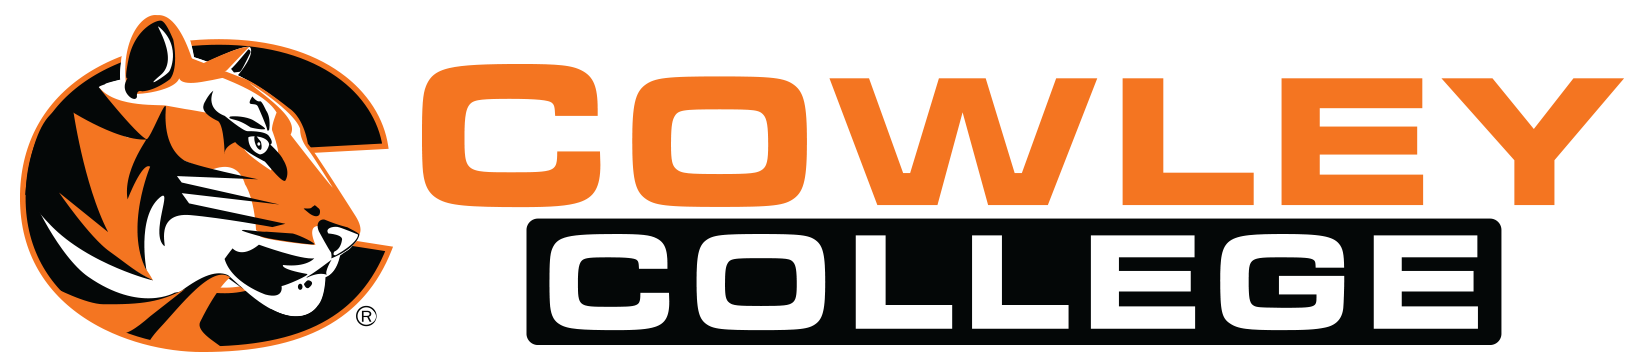 Cowley_College_logo-horiz.png